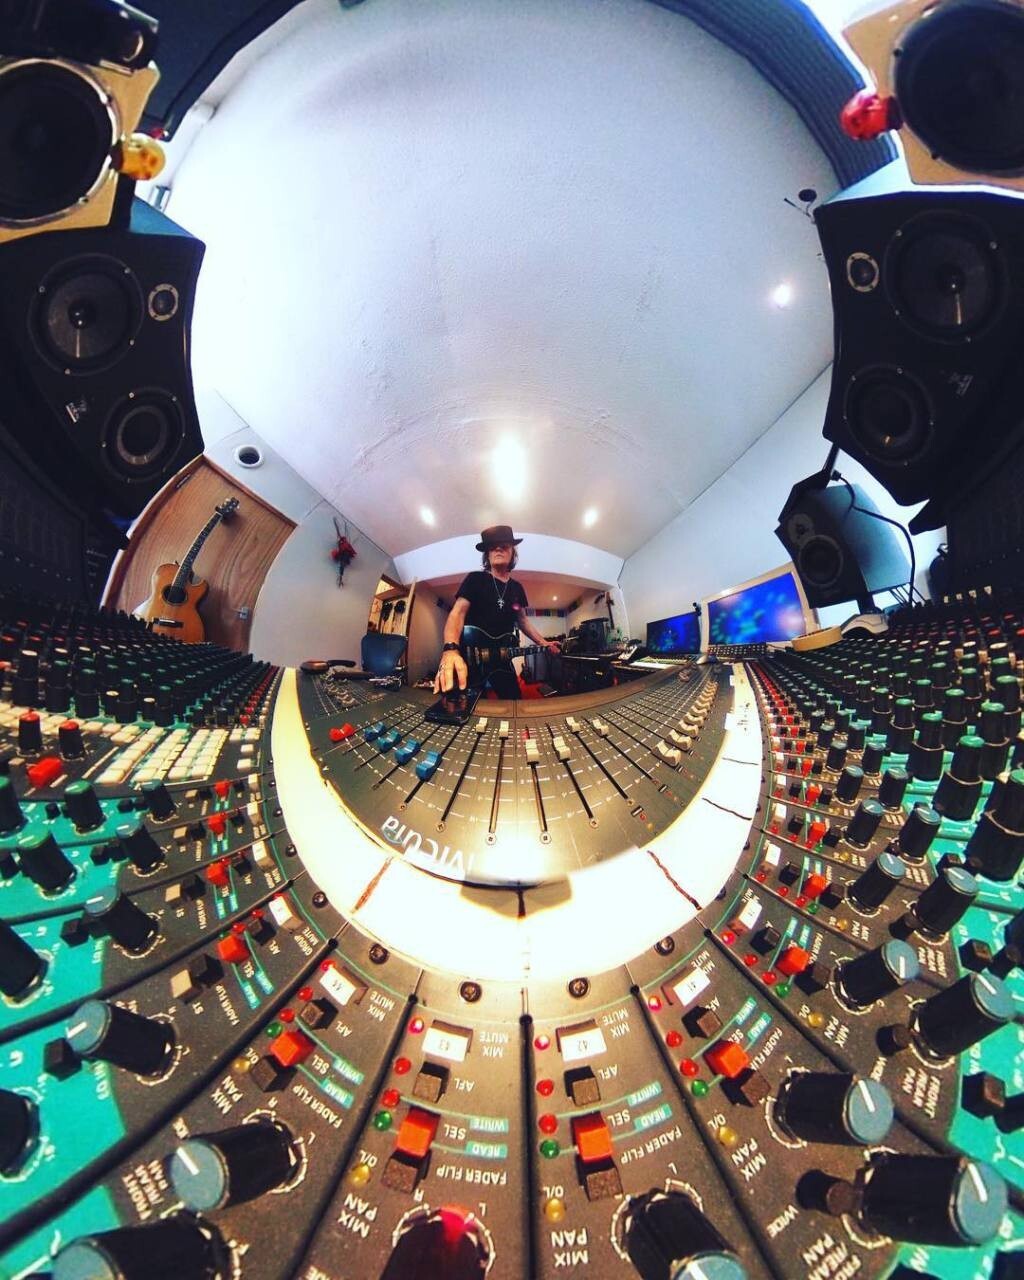 Iflyer サイケデリック トランスの第一人者 Juno Reactor が最新アルバムのフルミックスを公開